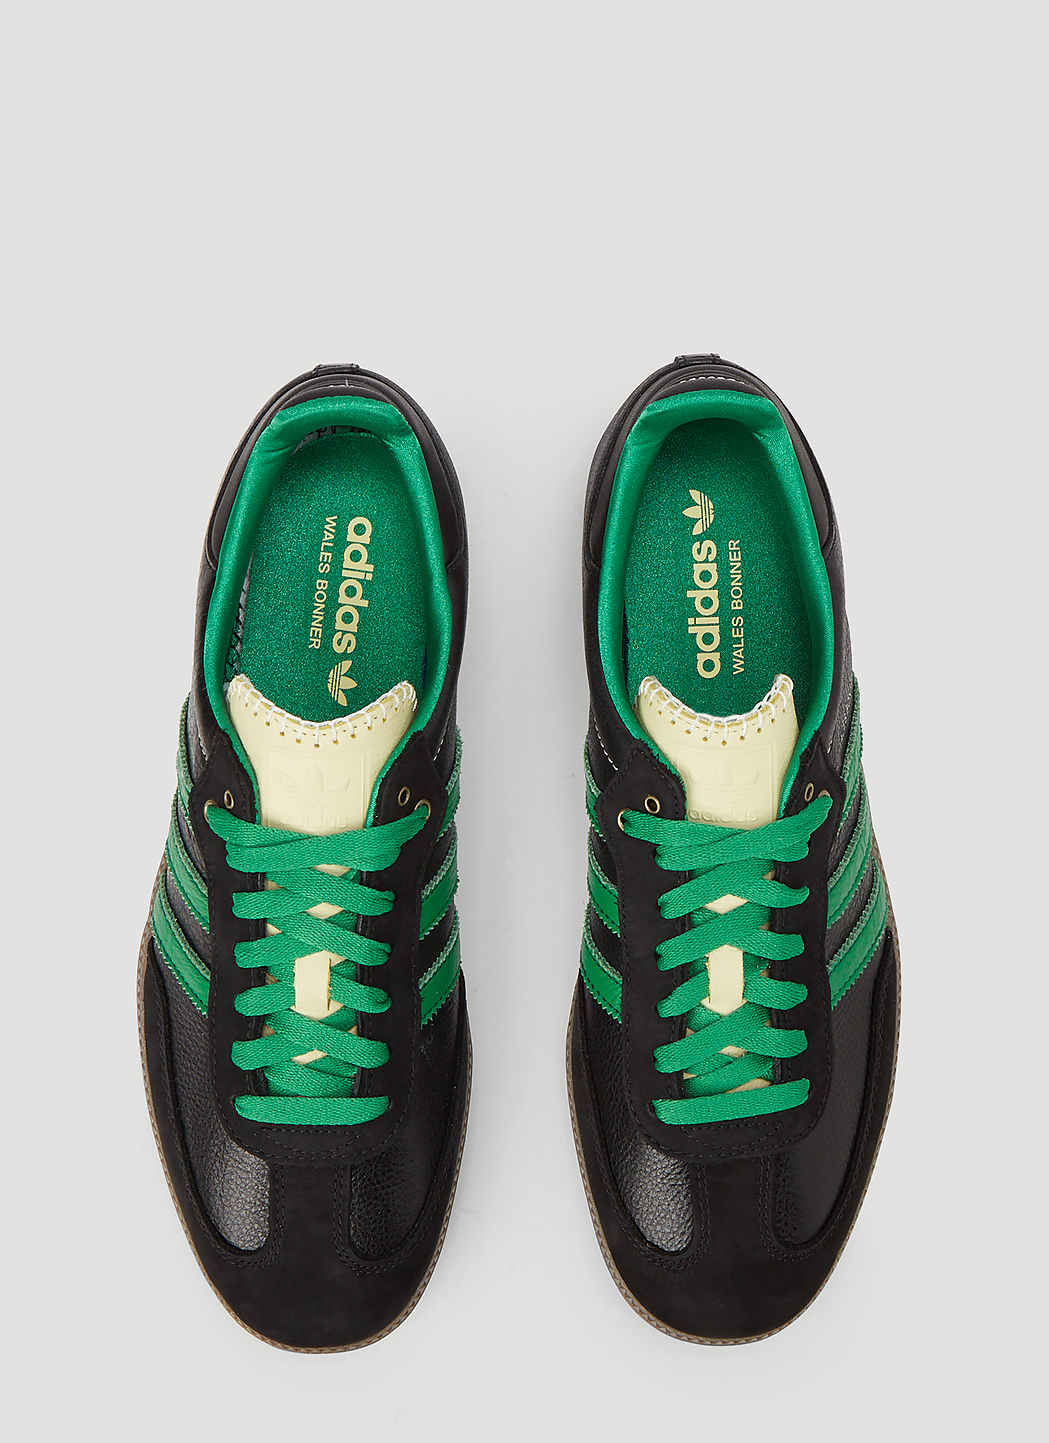 adidas by Wales Bonner Unisex Samba Sneakers in Black | LN-CC